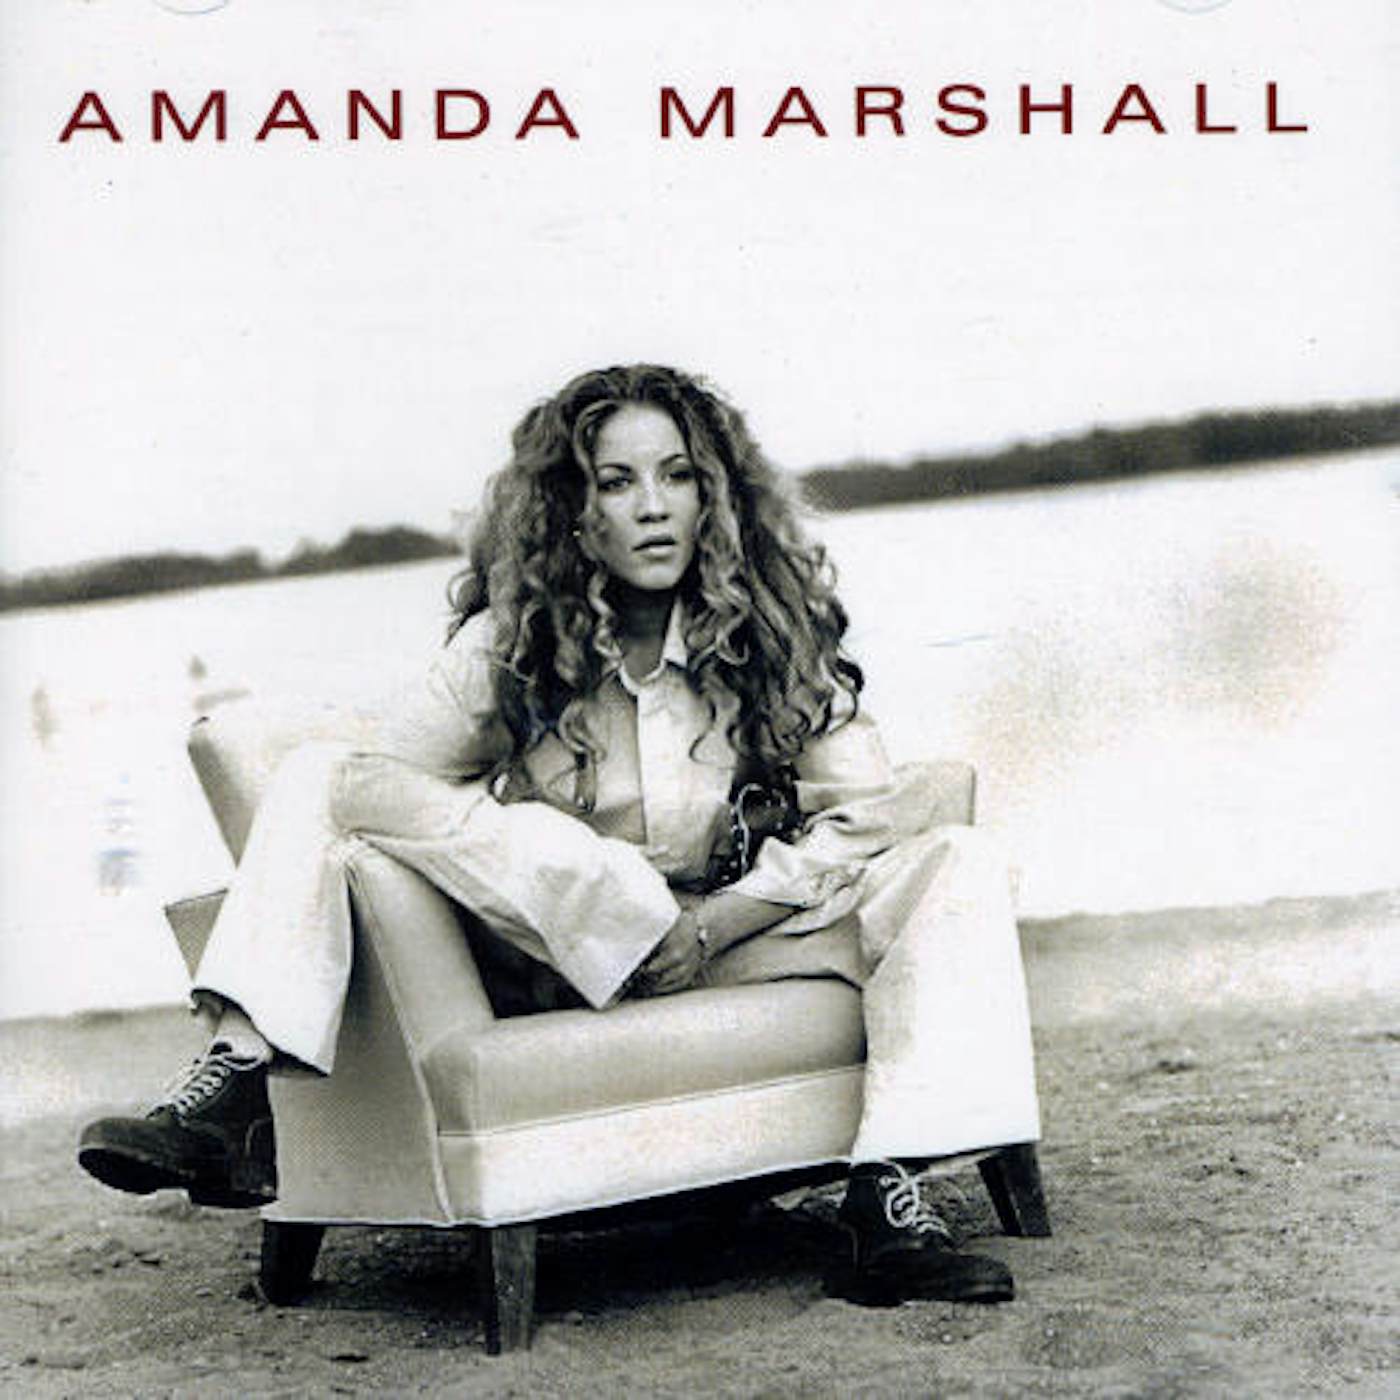 AMANDA MARSHALL CD